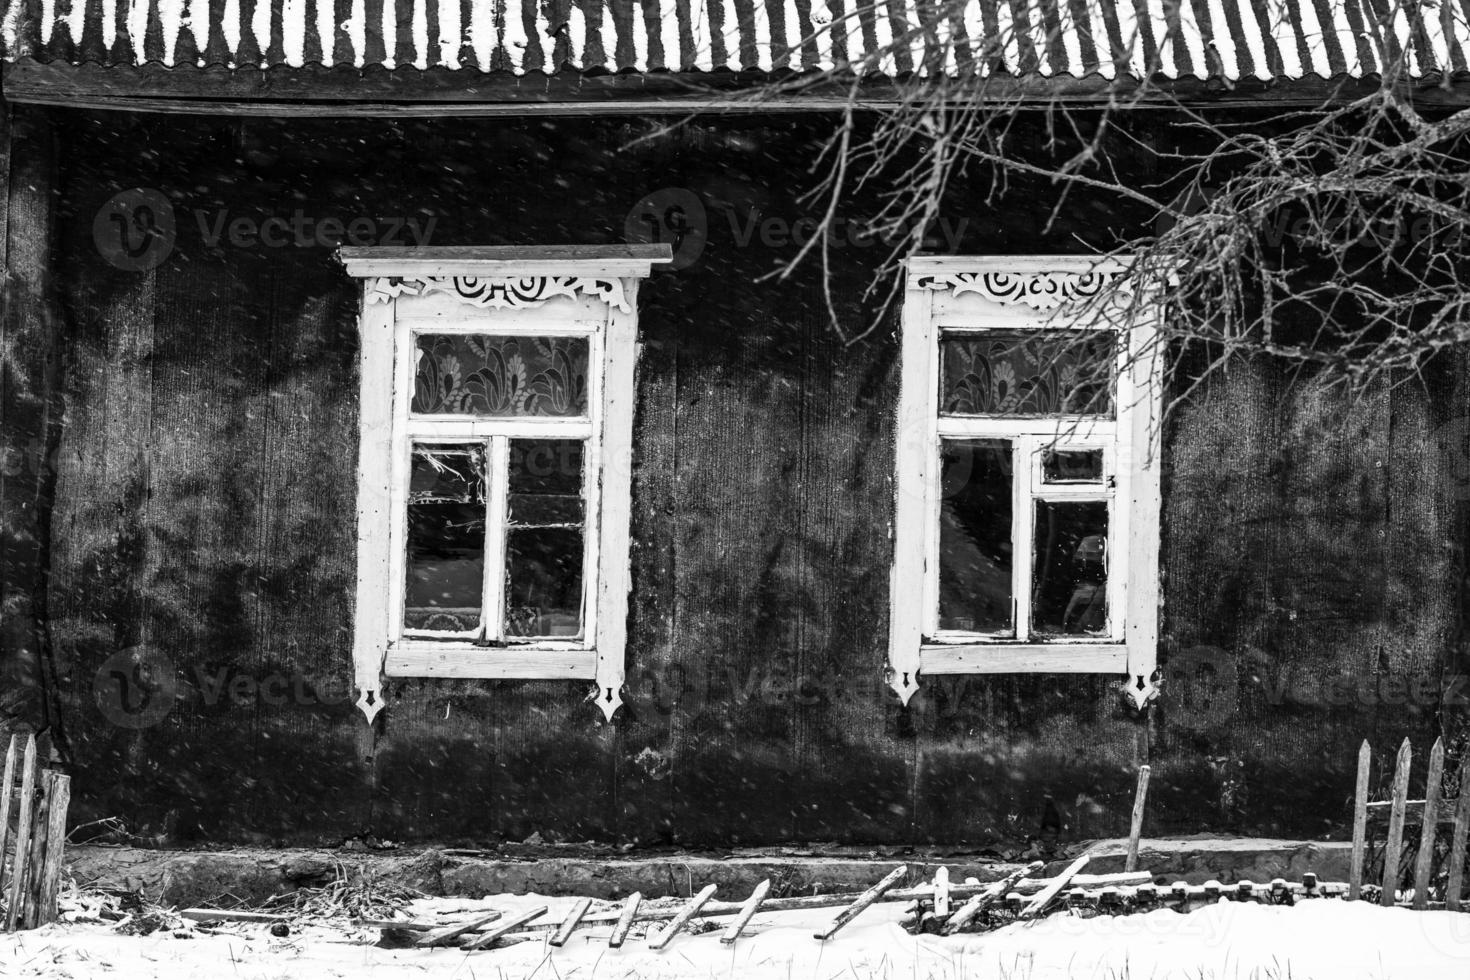 Latvian rural village landscape in Latgale in winter photo